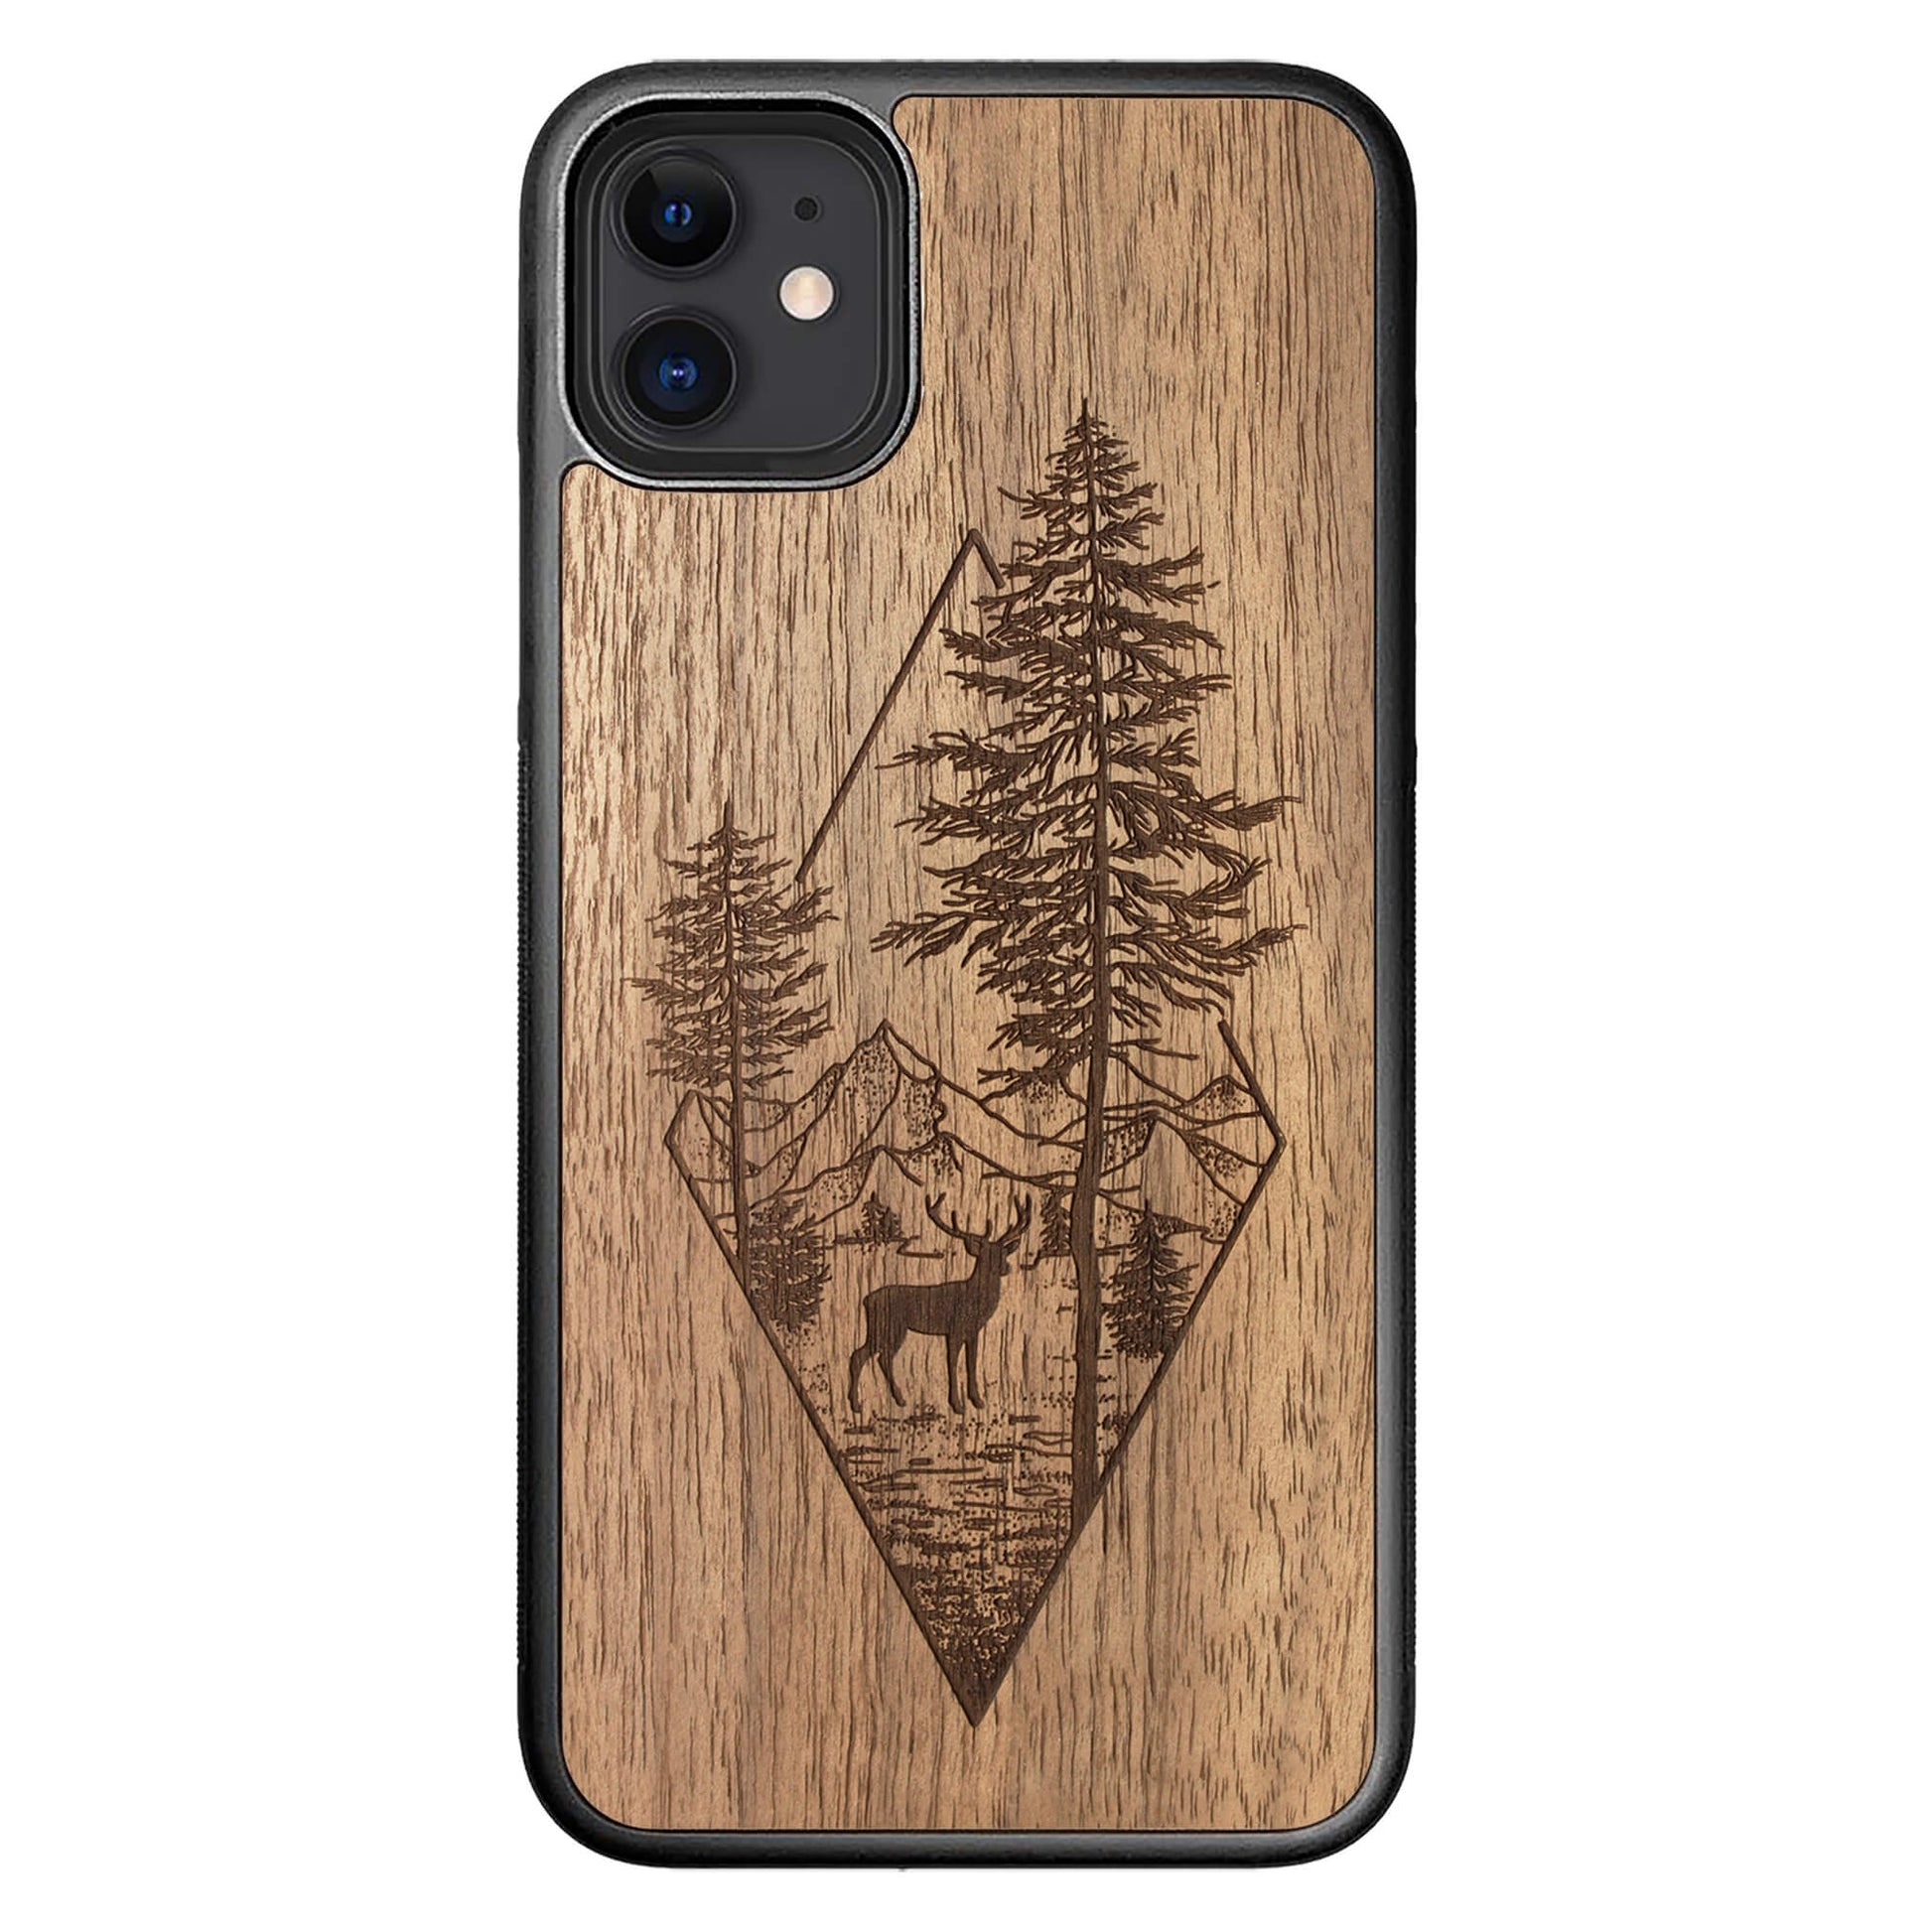 Wooden Case for iPhone 11 Deer Woodland